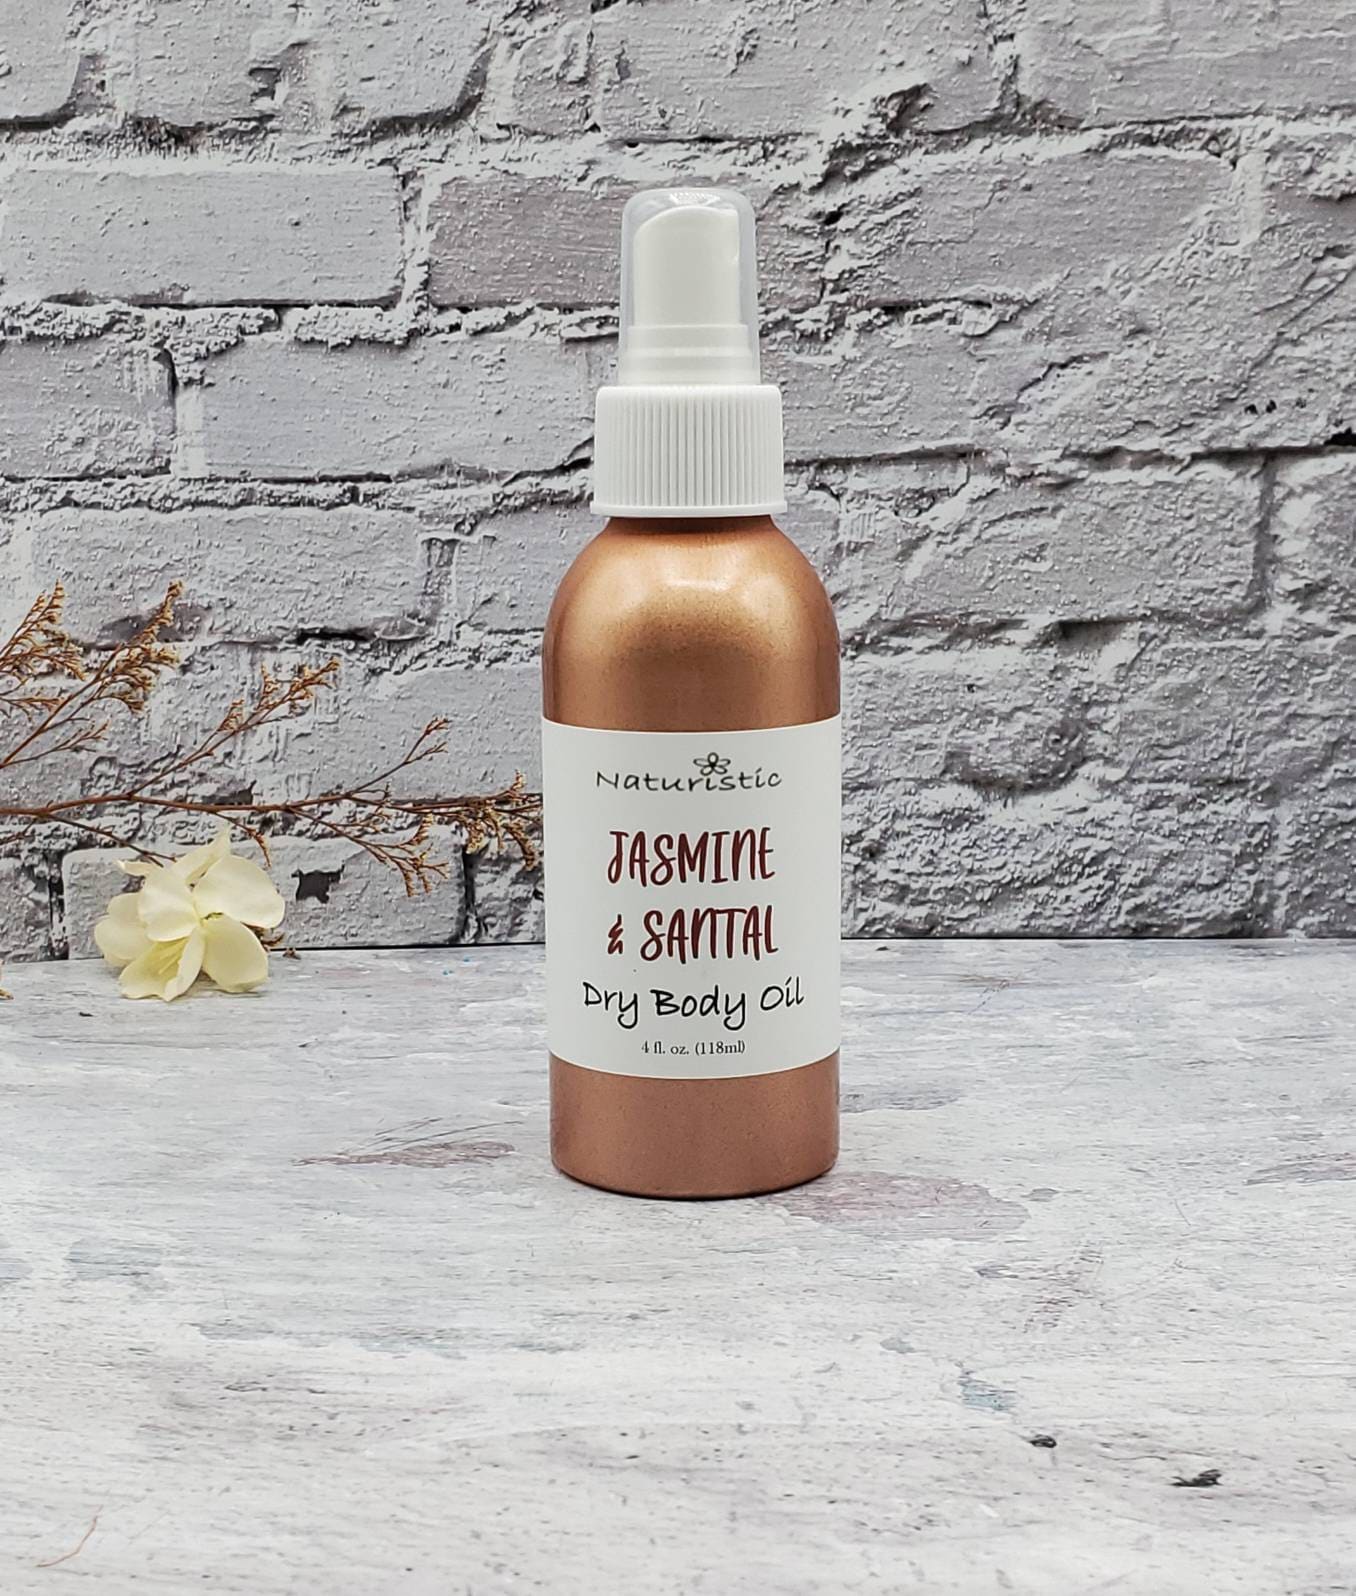 Jasmine & Santal Dry Body Oil Spray, Essential Oils, Natural Fragrance,  Large 4 Oz. Aluminum Bottle 